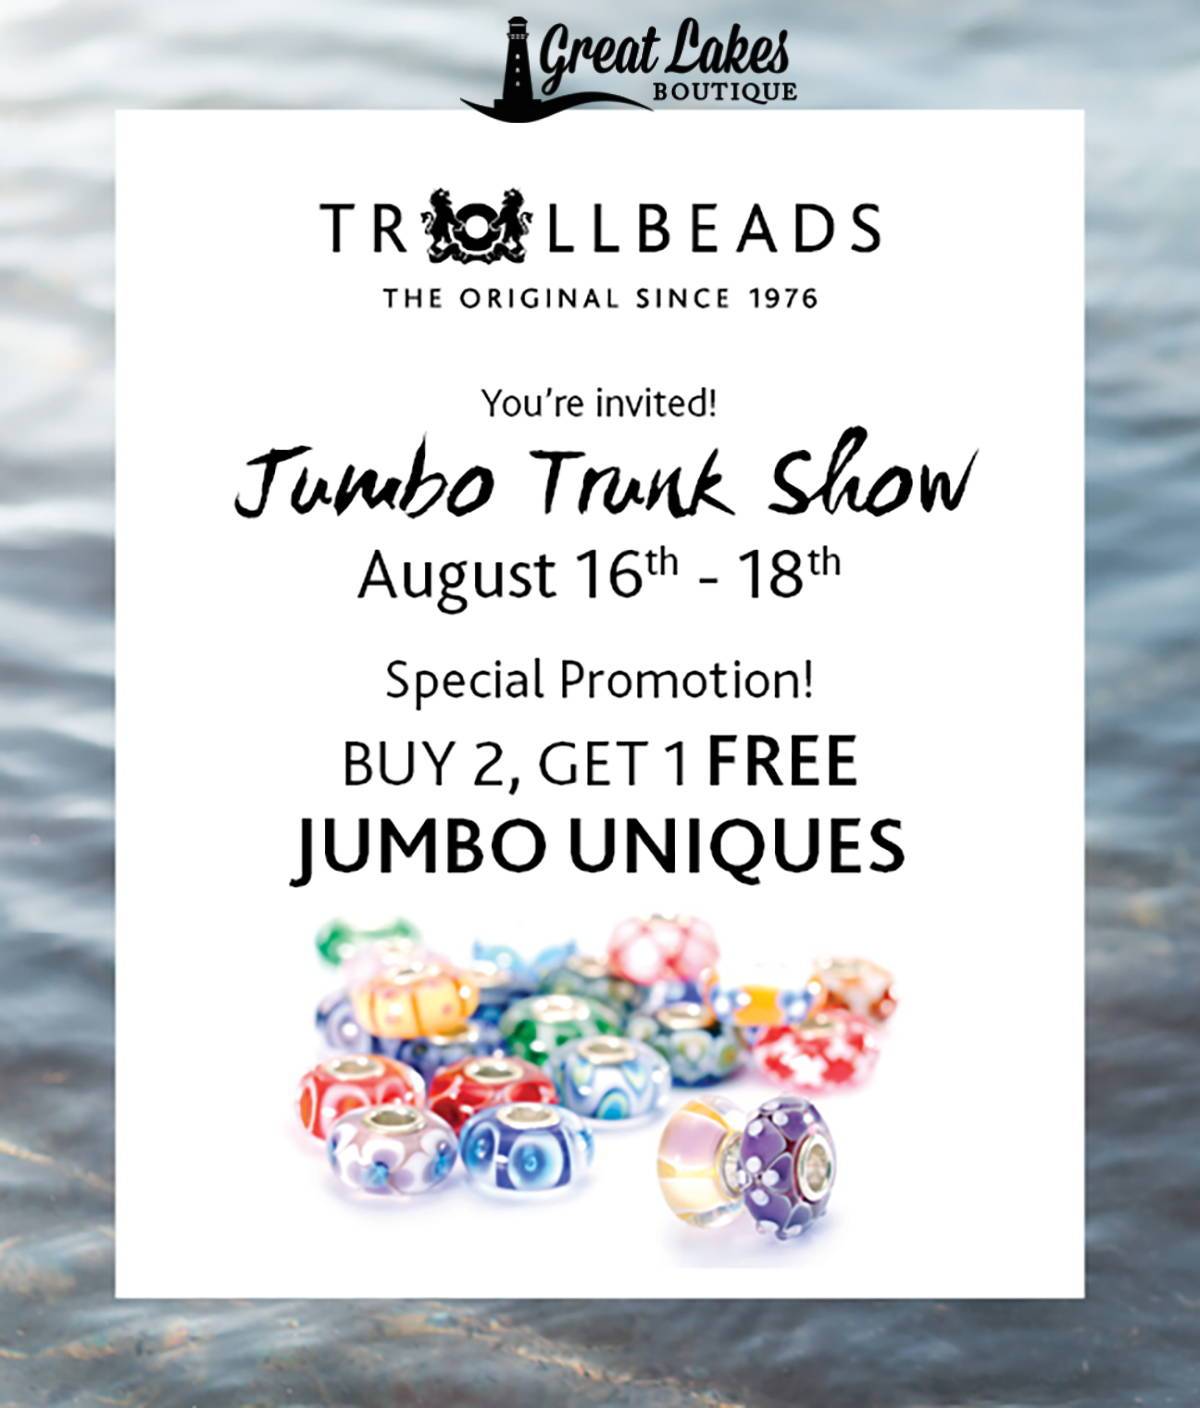 Trollbeads Jumbo Unique Event Details